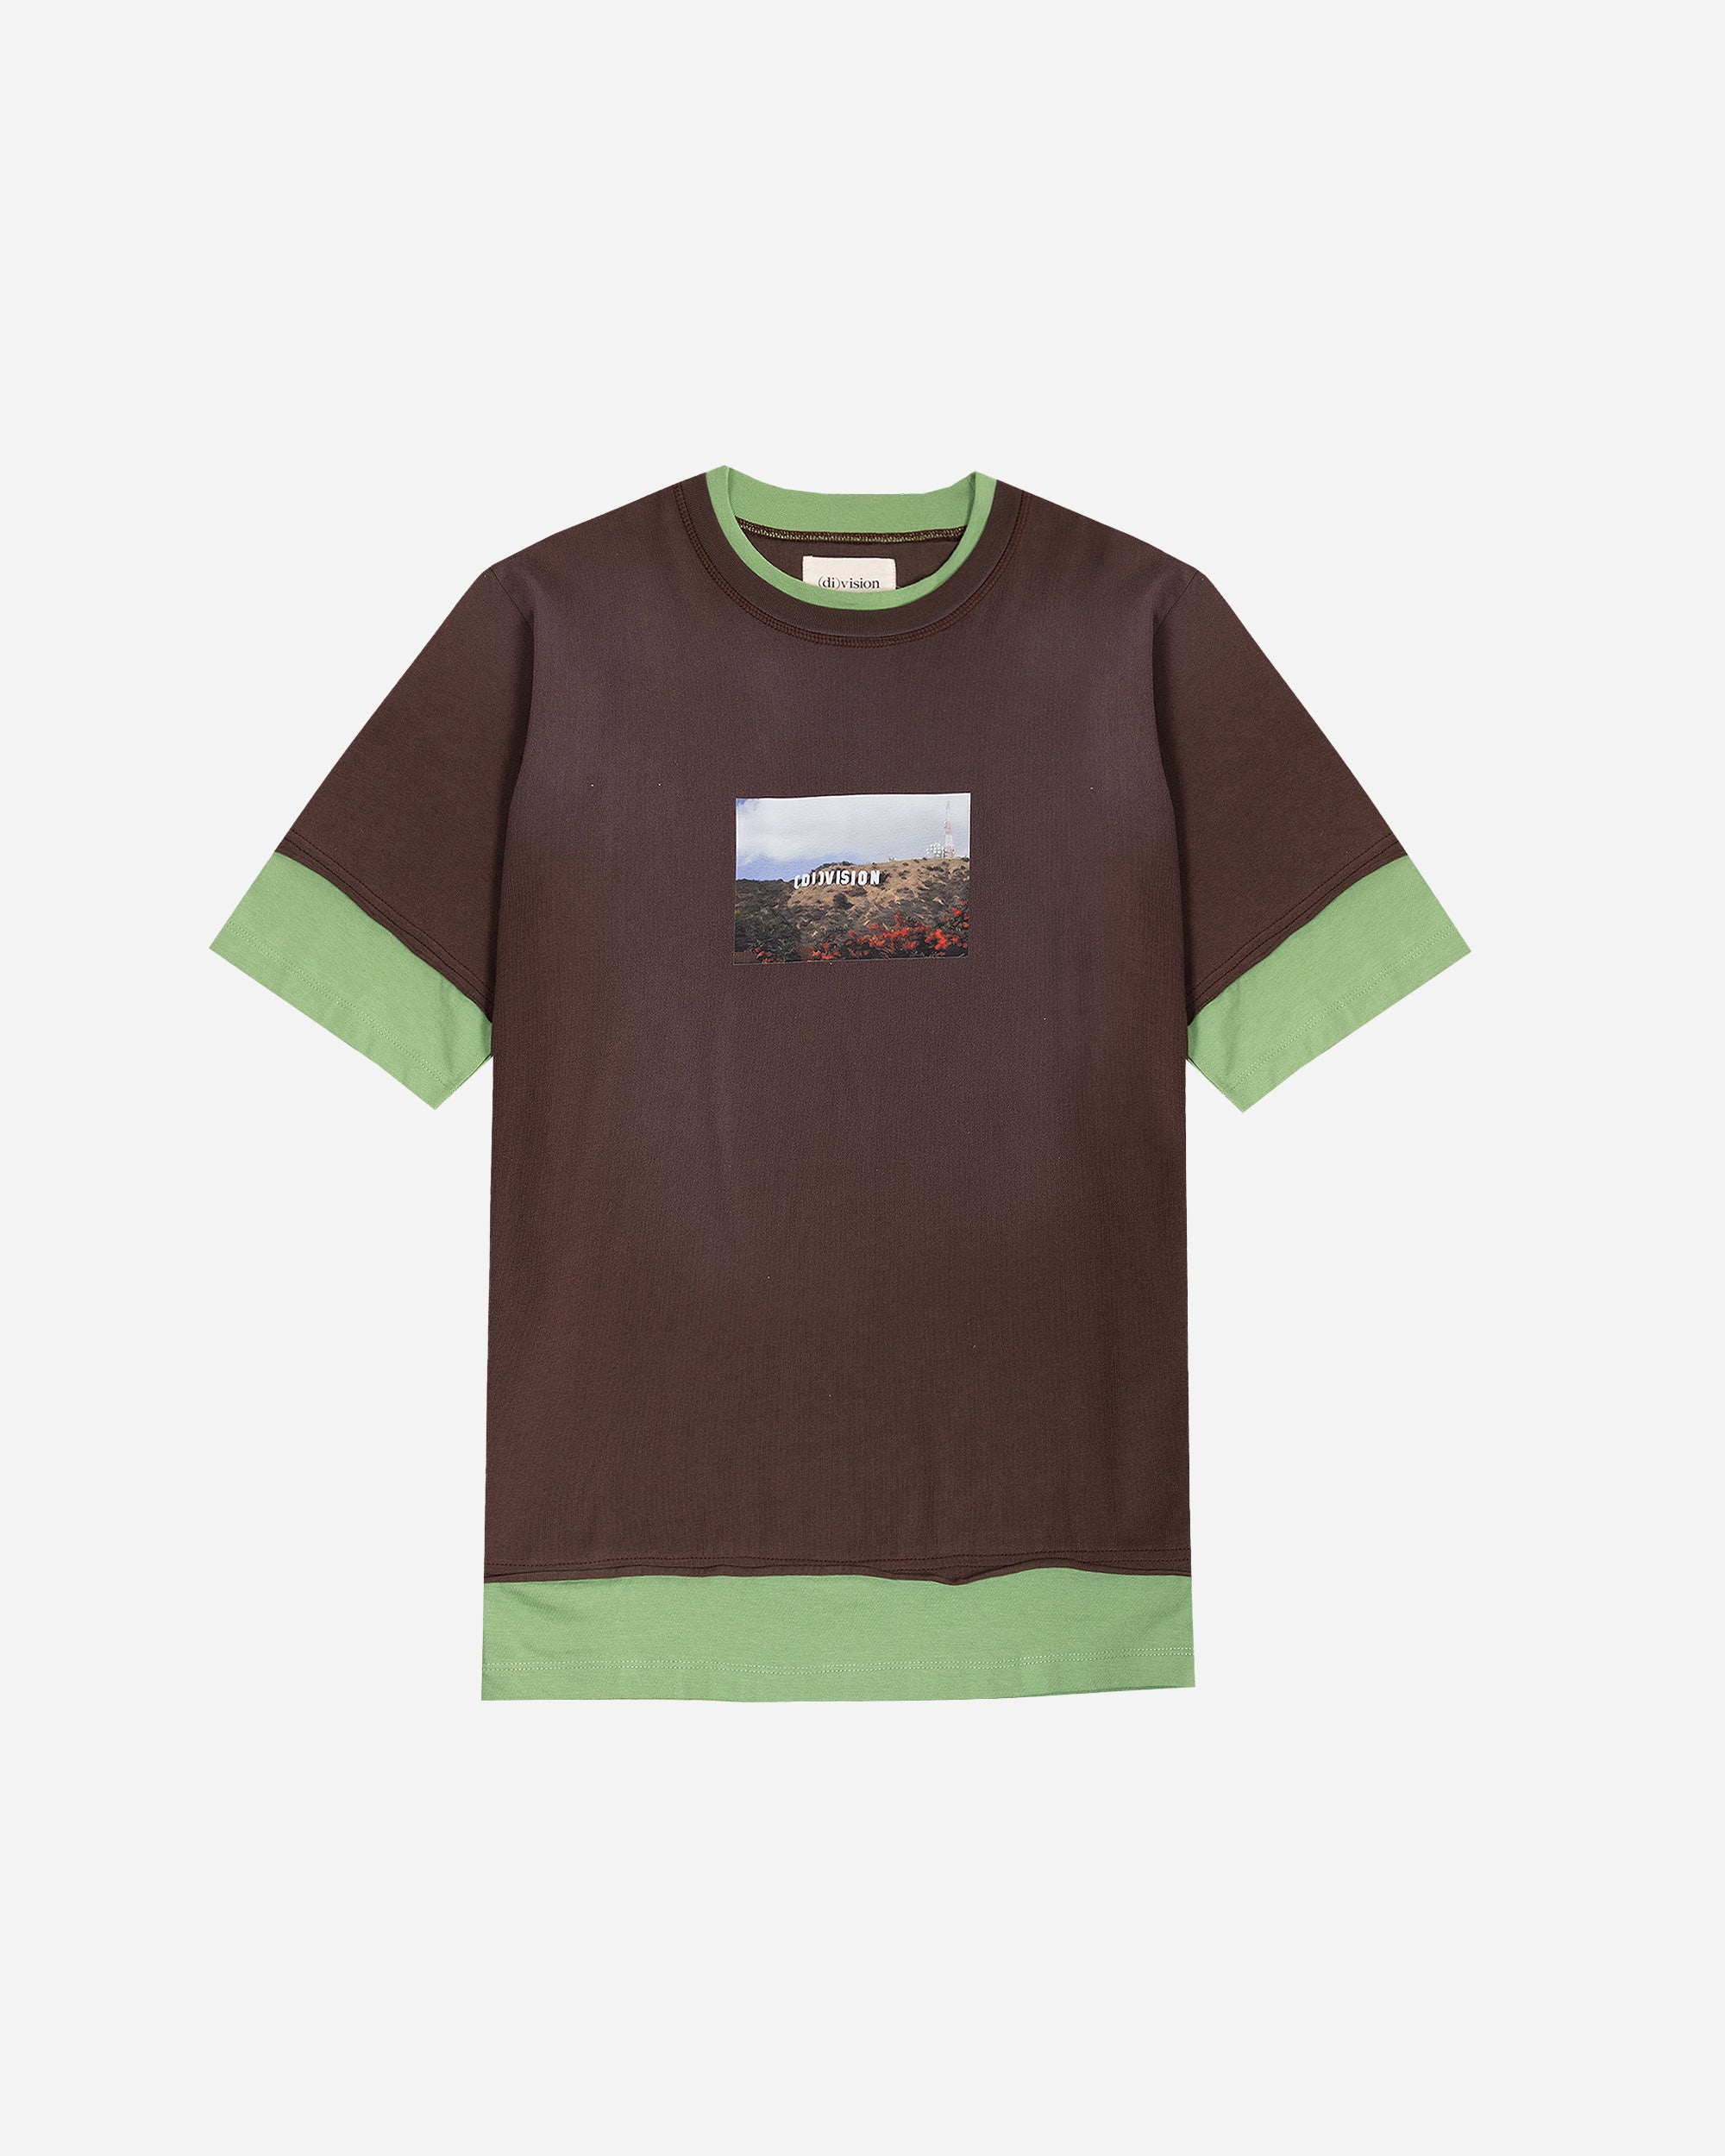 (di)vision Layered T-shirt BROWN / GREEN COMB. 050004-2